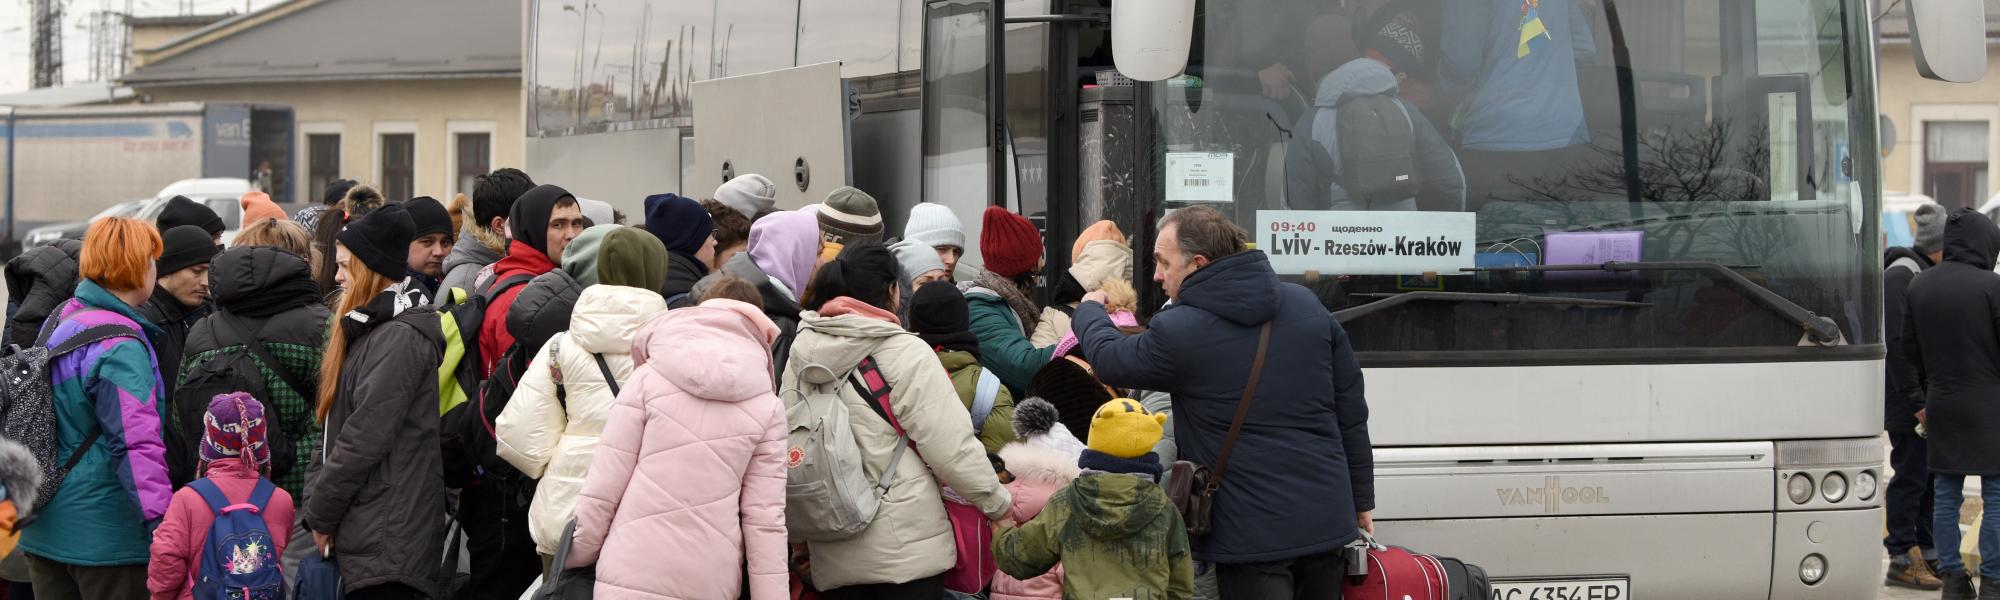 Road transport solidarity strong in humanitarian response to Ukraine crisis